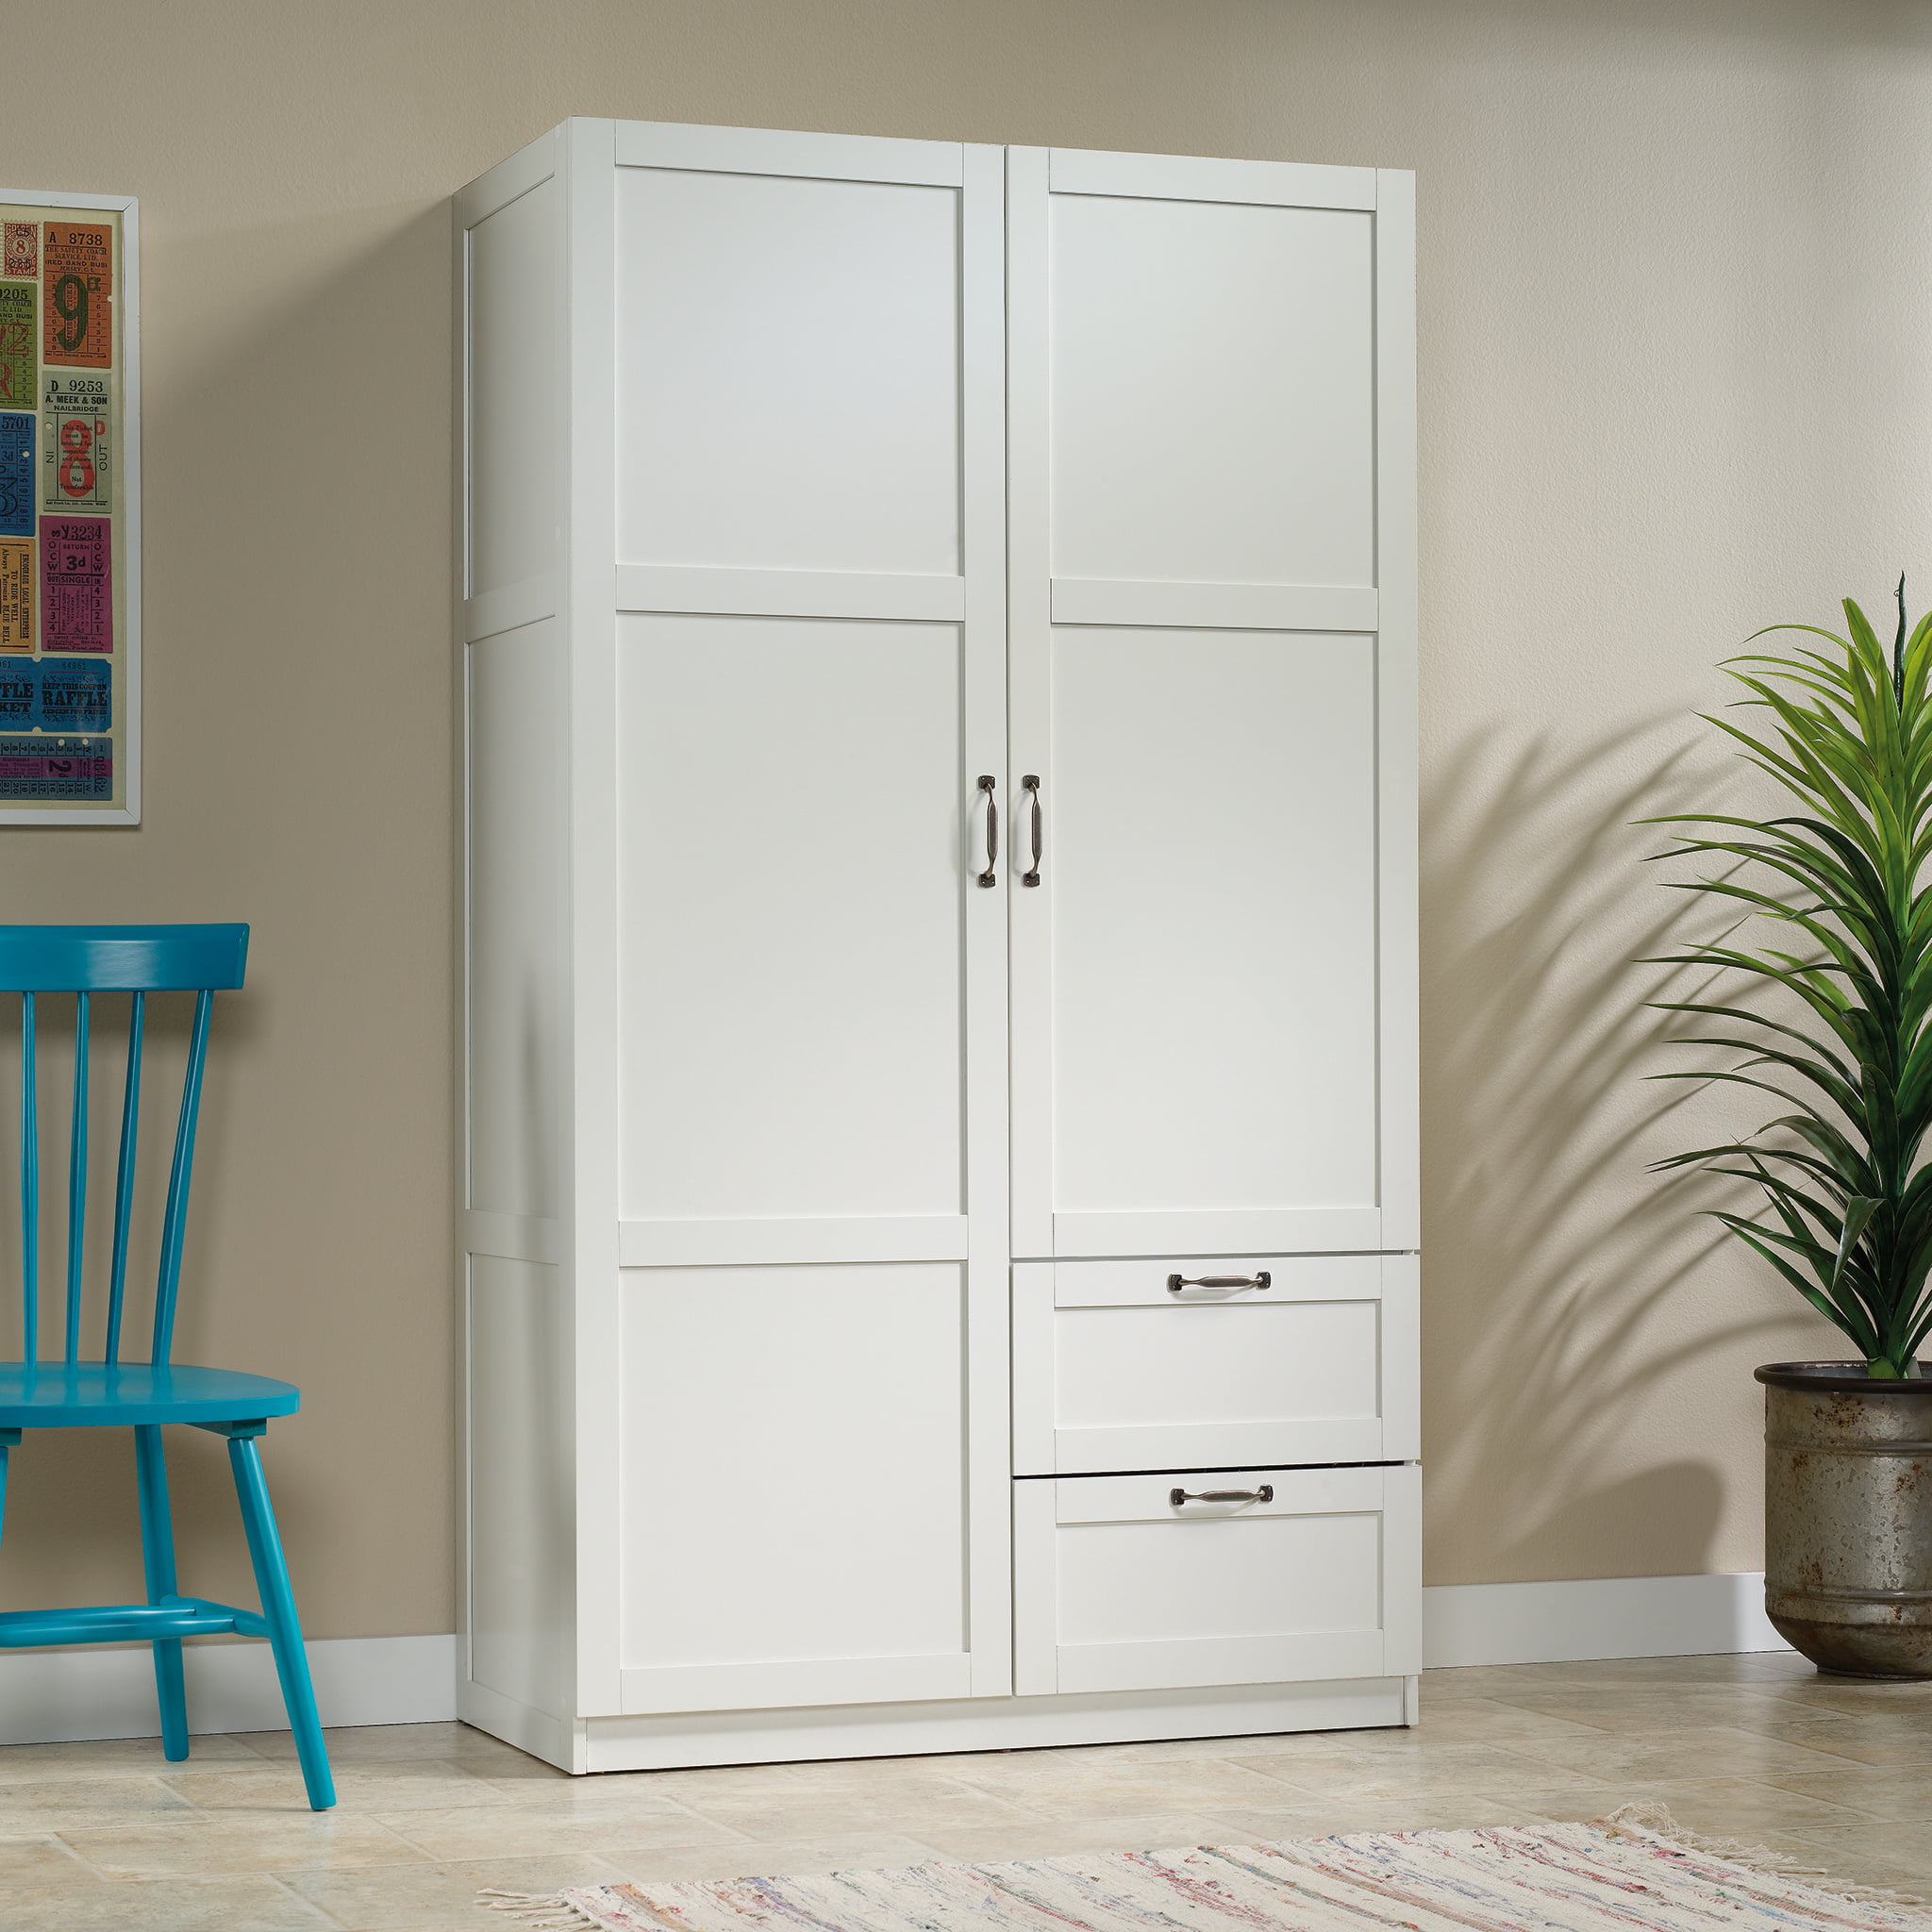 Sauder Select 40 Wide Wardrobe Storage Cabinet, White Finish